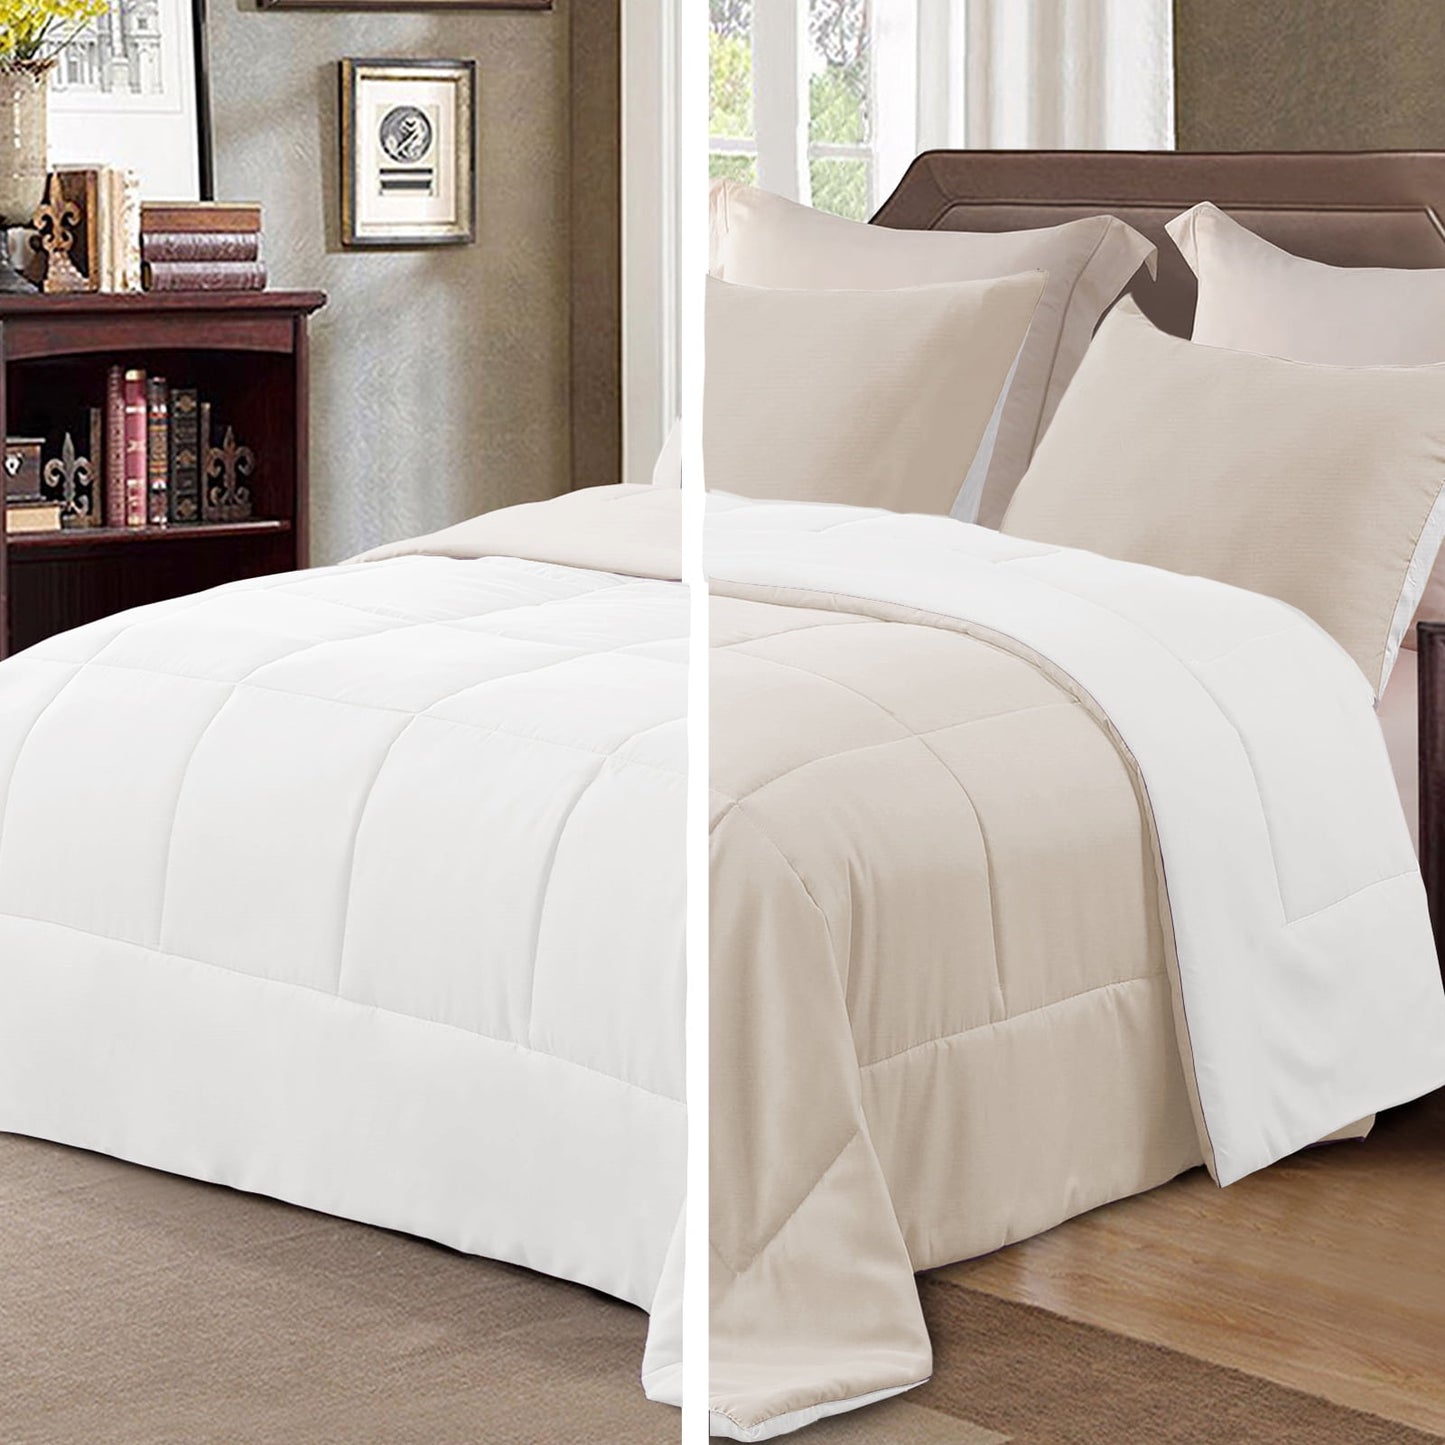 Exclusivo Mezcla Lightweight Reversible 3-Piece Comforter Set All Seasons, Down Alternative Comforter with 2 Pillow Shams, King Size, Beige/White